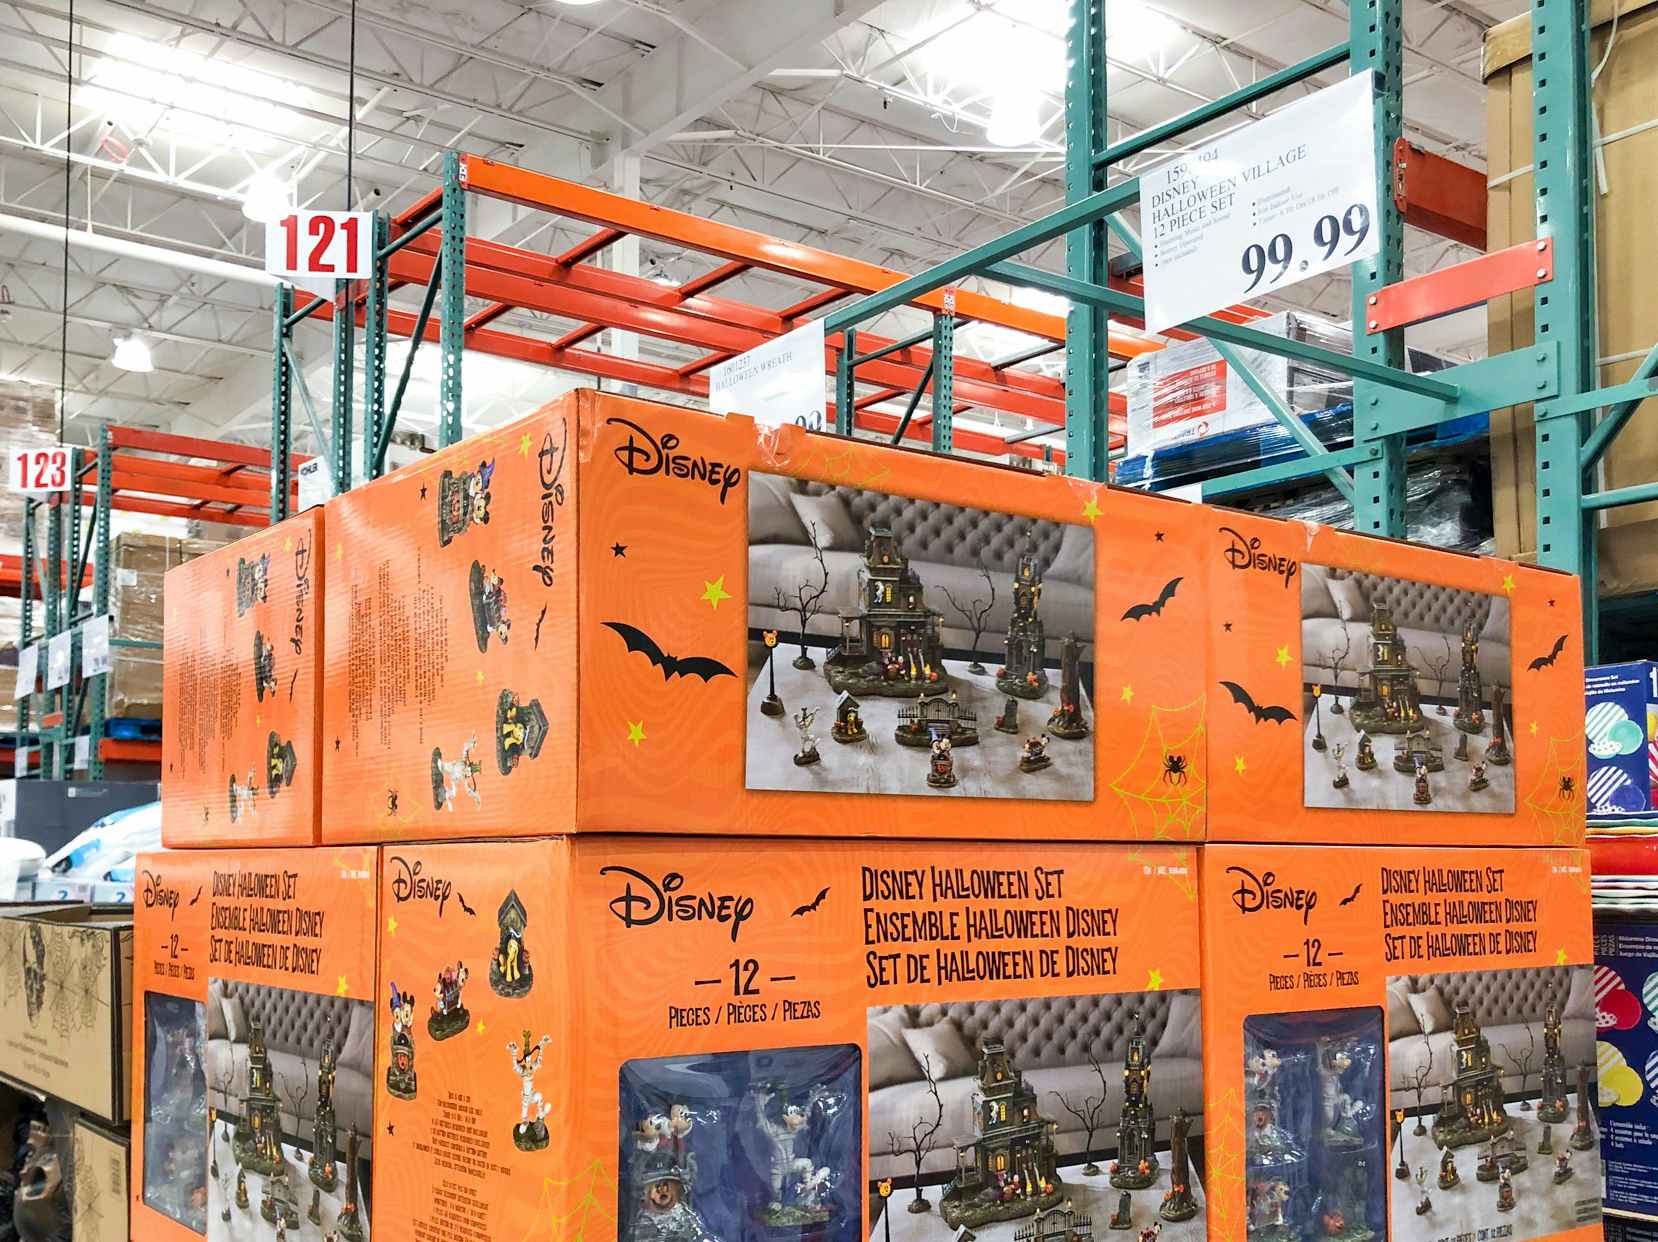 The Disney Halloween Village set stocked at Costco